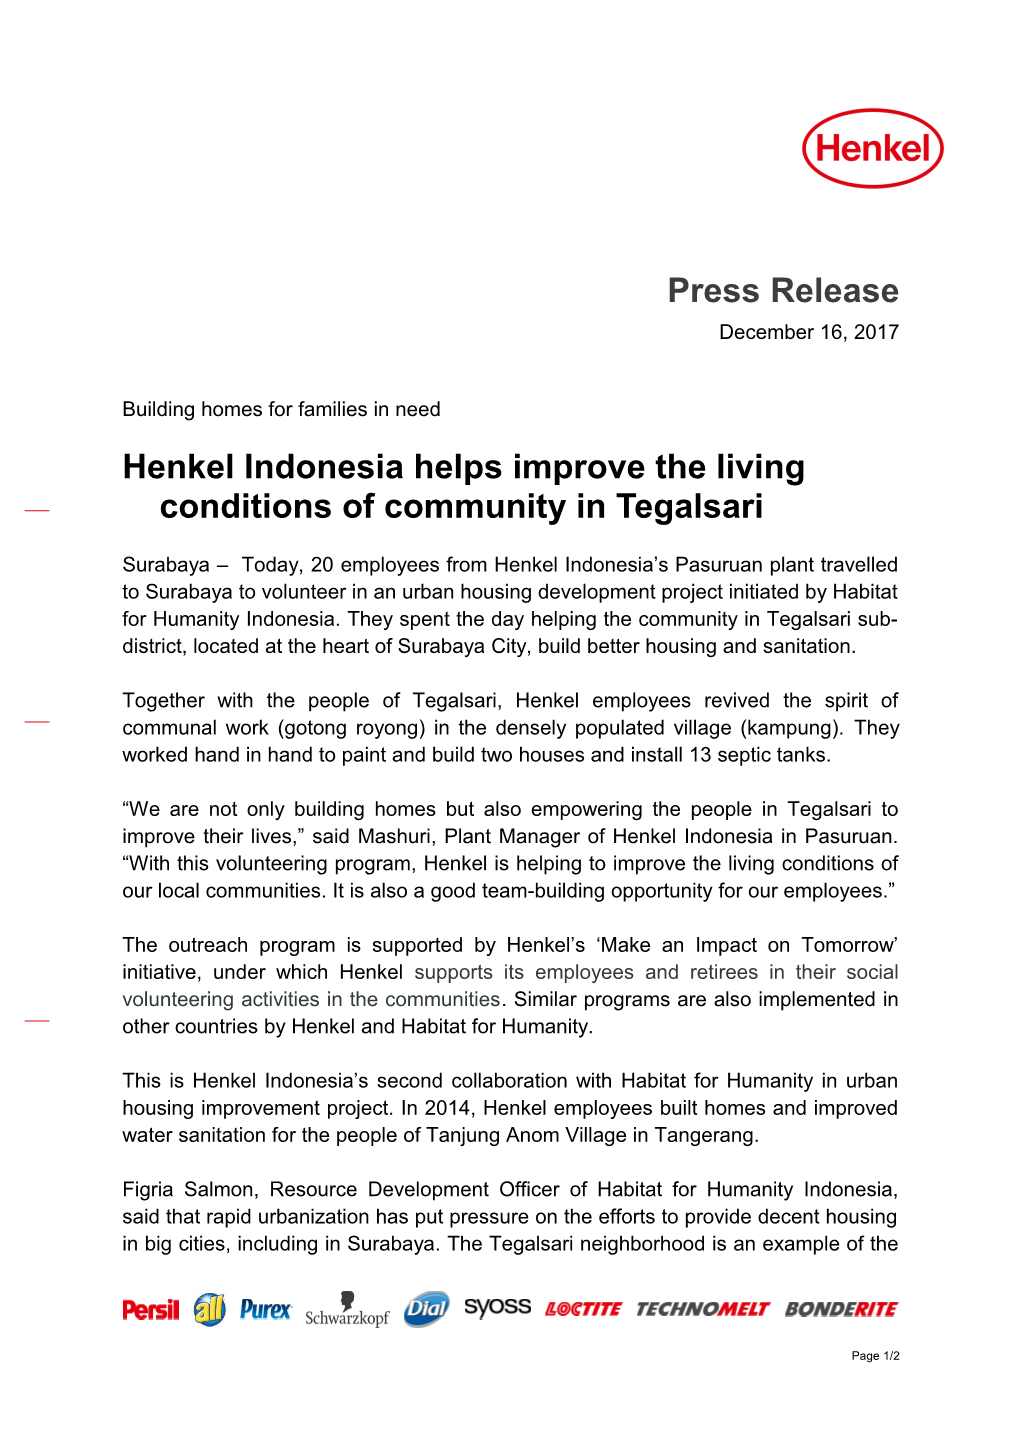 Henkel Indonesia Helps Improve the Living Conditions of Community in Tegalsari